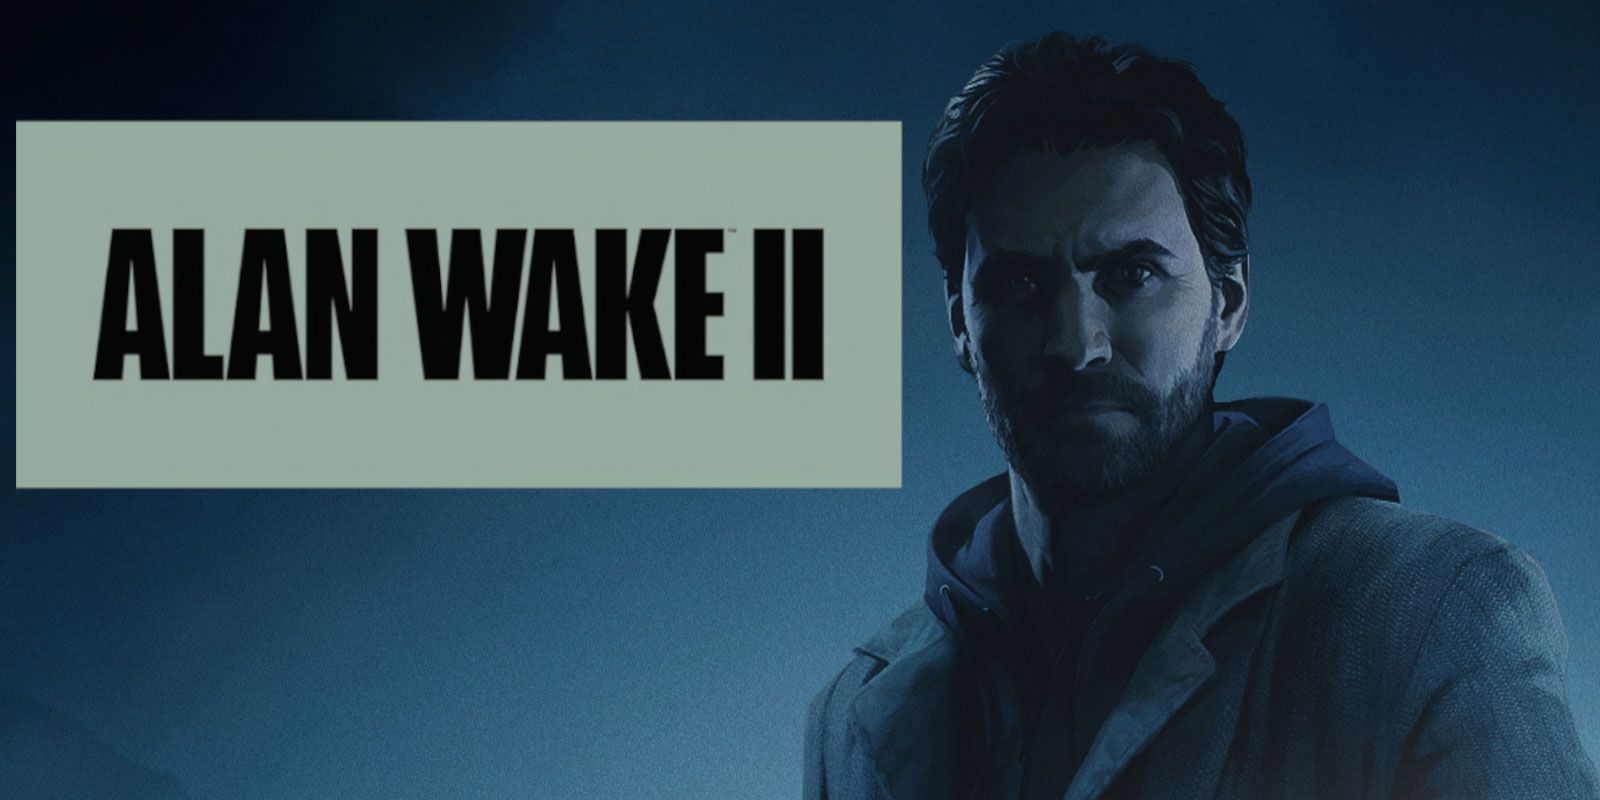 Is Alan Wake 2 on Steam?